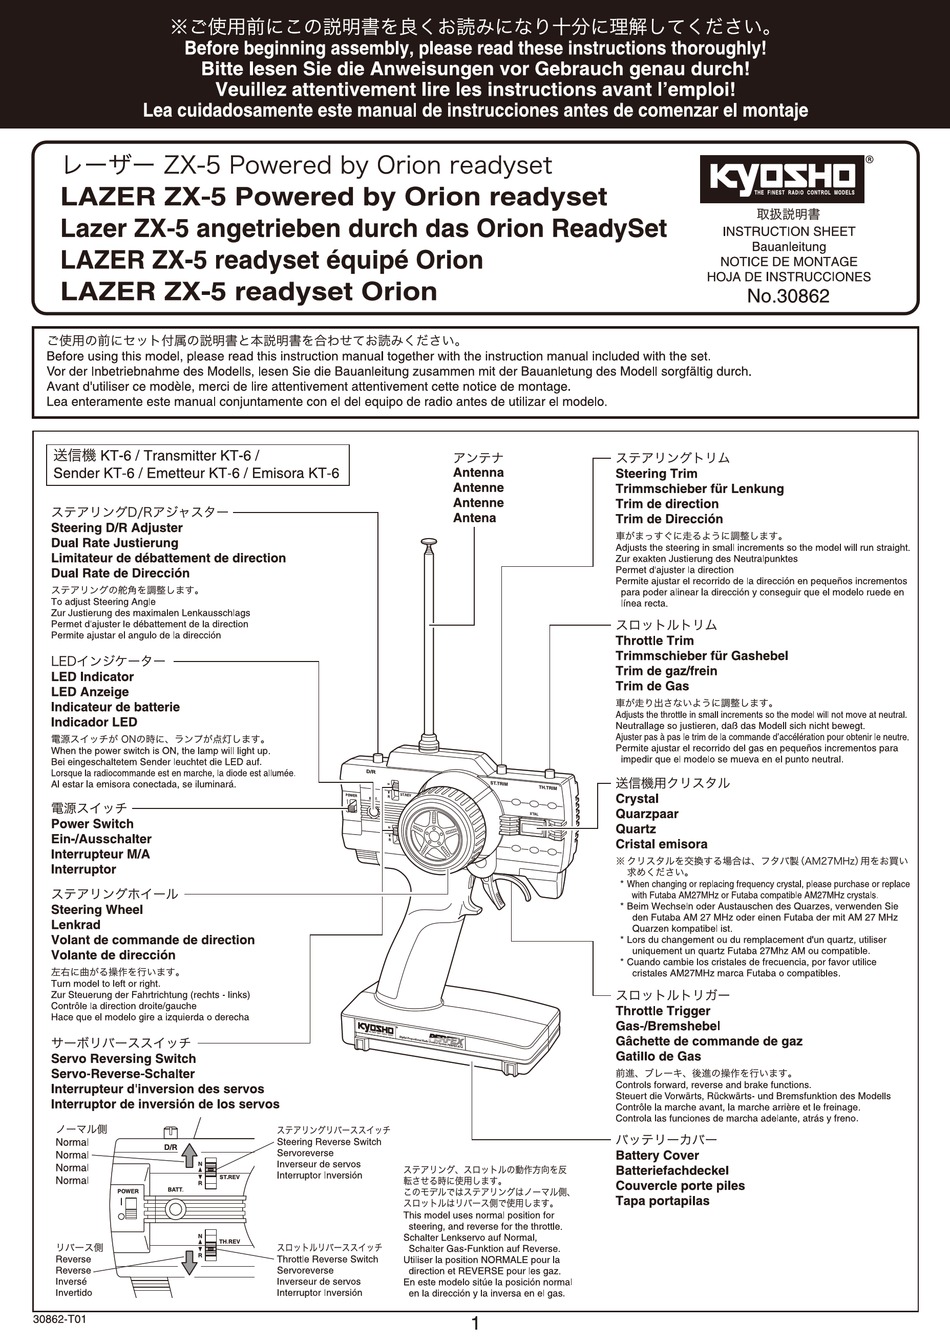 KYOSHO LAZER ZX-5 READYSET INSTRUCTION SHEET Pdf Download | ManualsLib